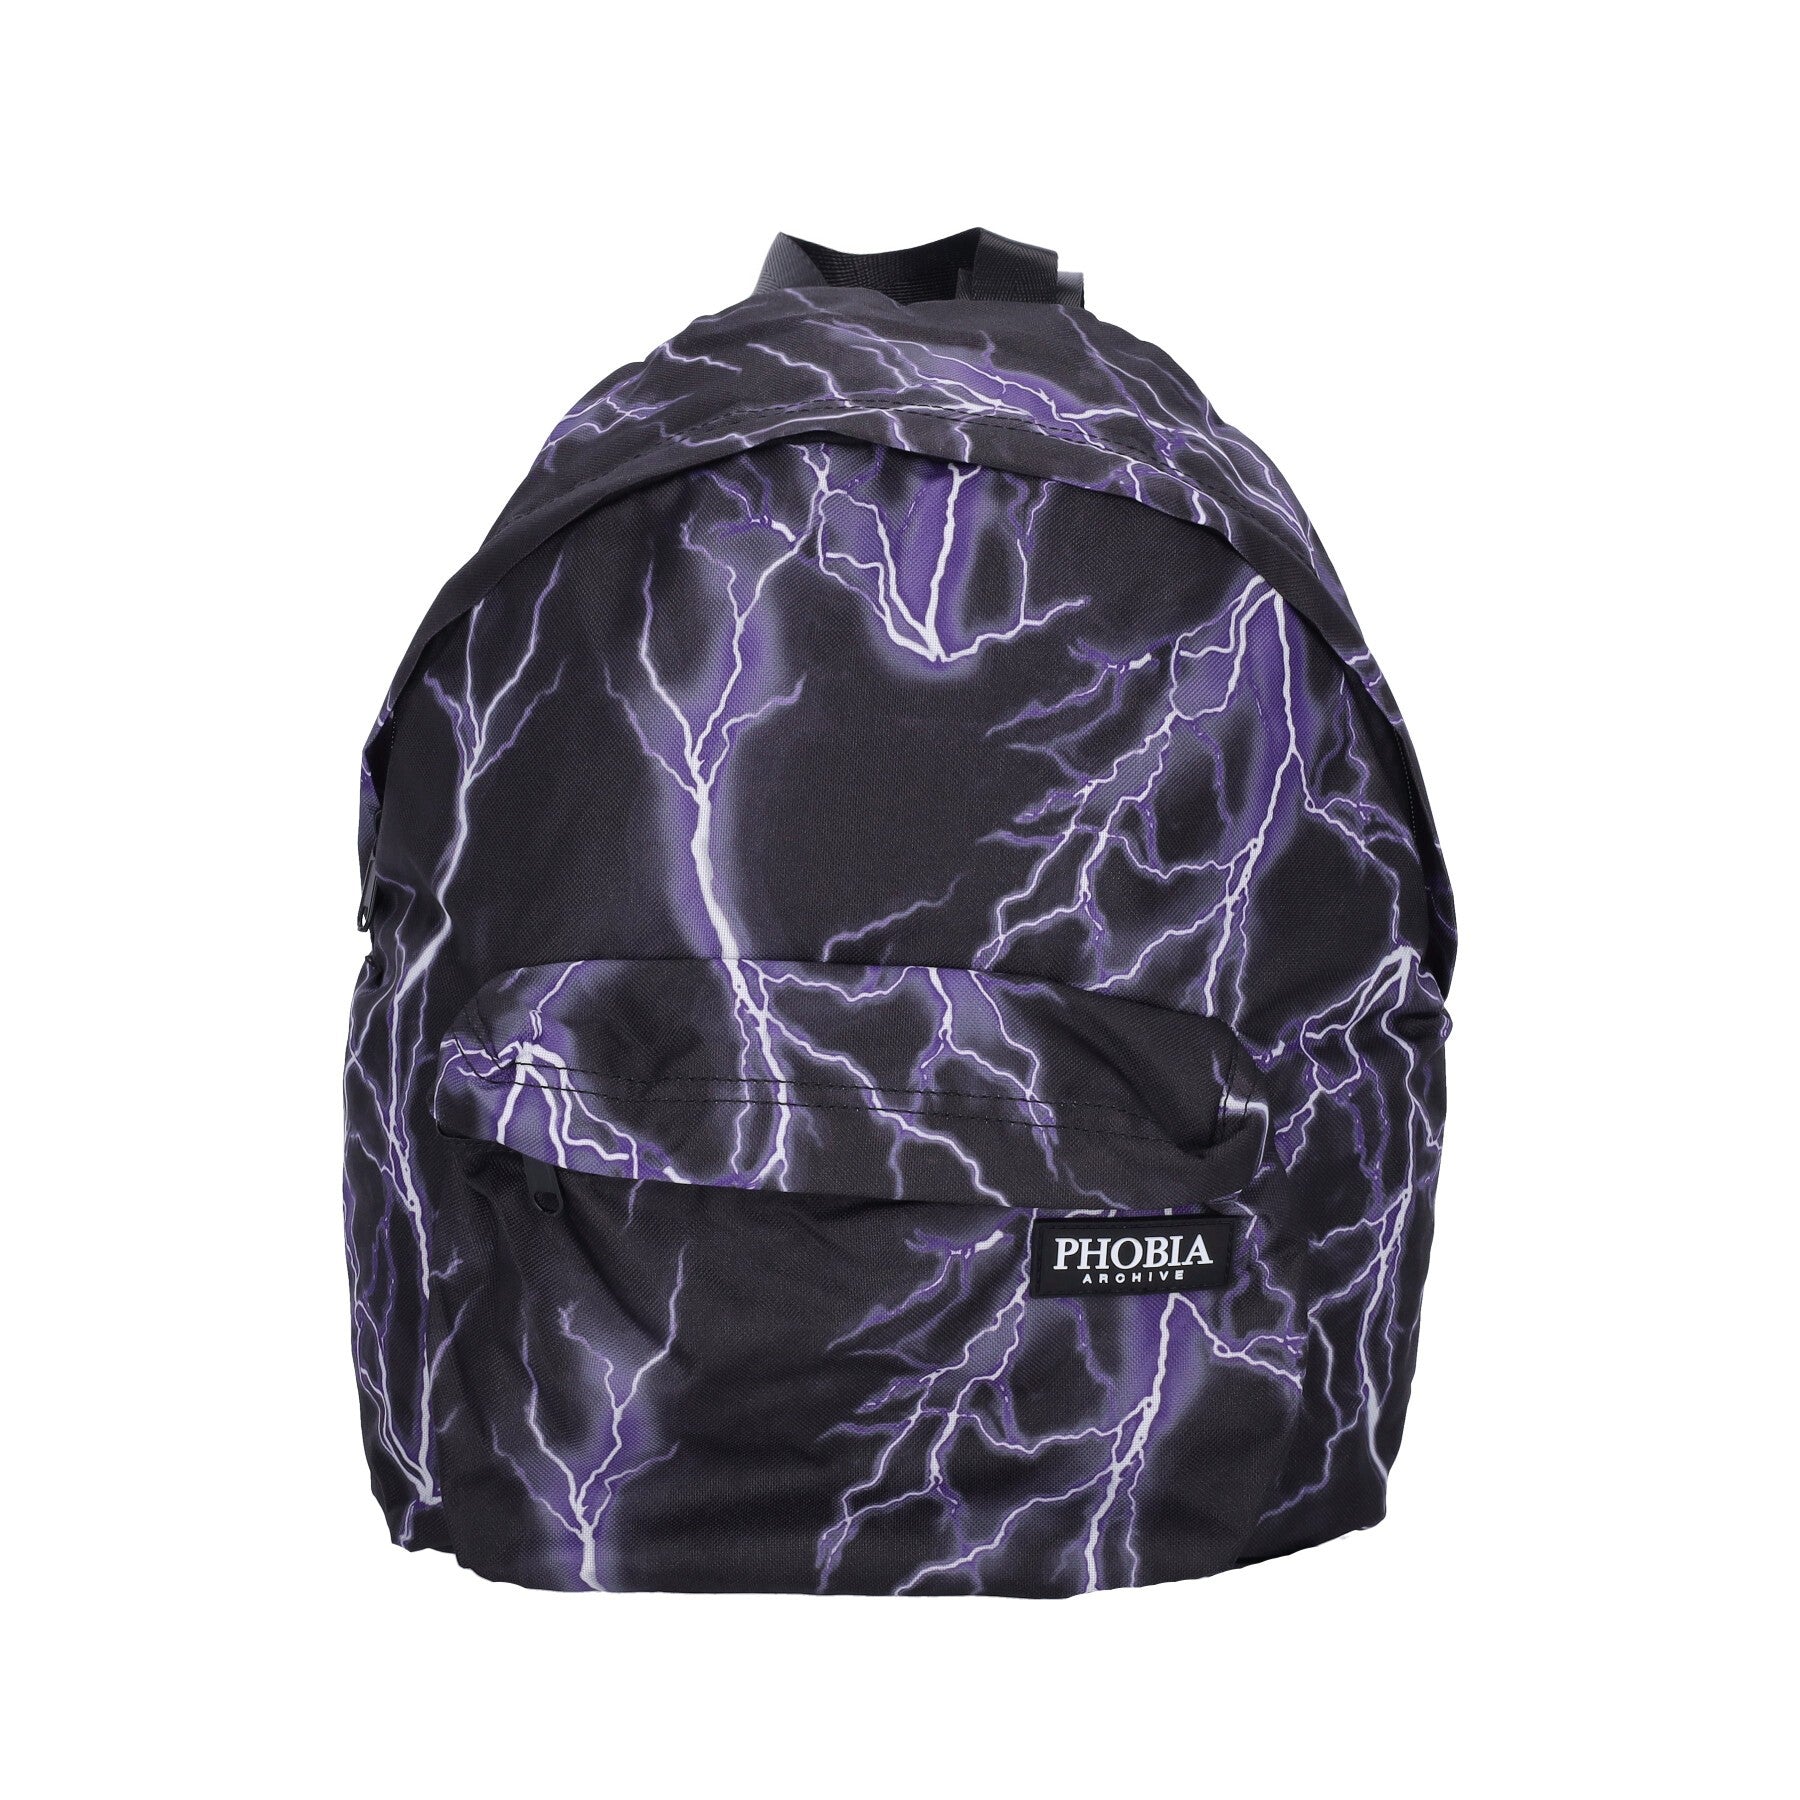 Phobia, Zaino Uomo Lightning Backpack, Black/purple